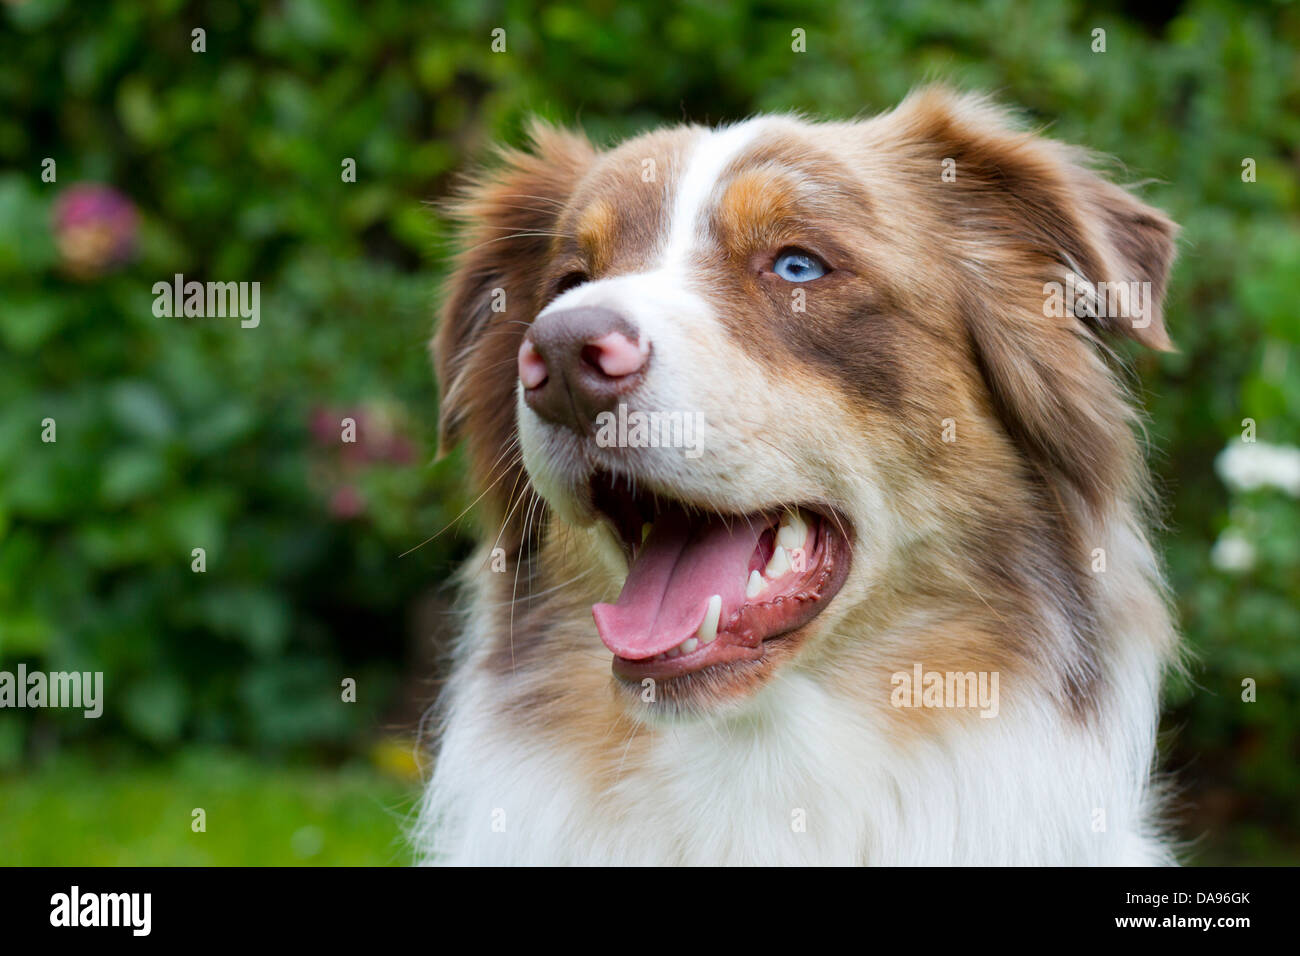 Australian Shepherd, shepherd, dog, sheepdog, portrait, animal, domestic animal, pet, Stock Photo